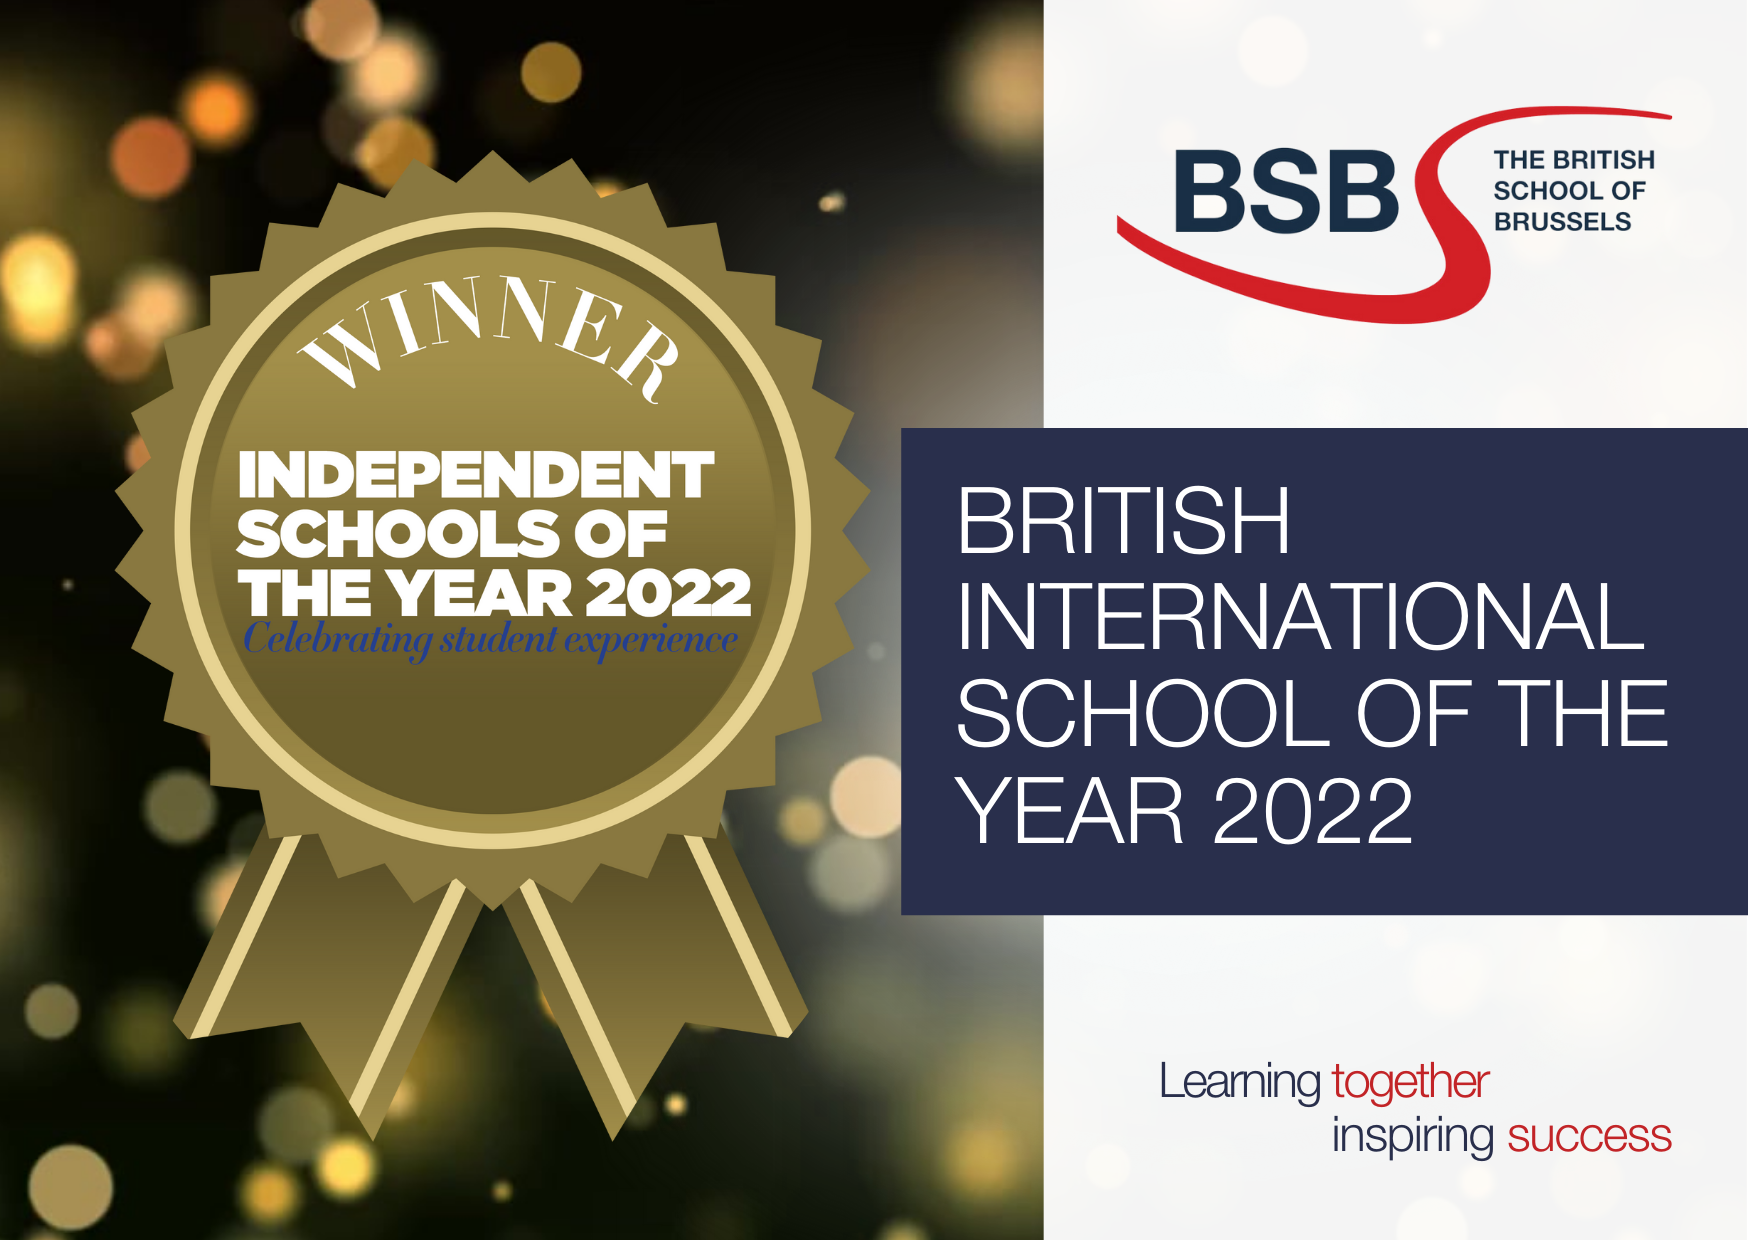 BRITISH INTERNATIONAL SCHOOL OF THE YEAR 2022 – Digital signage